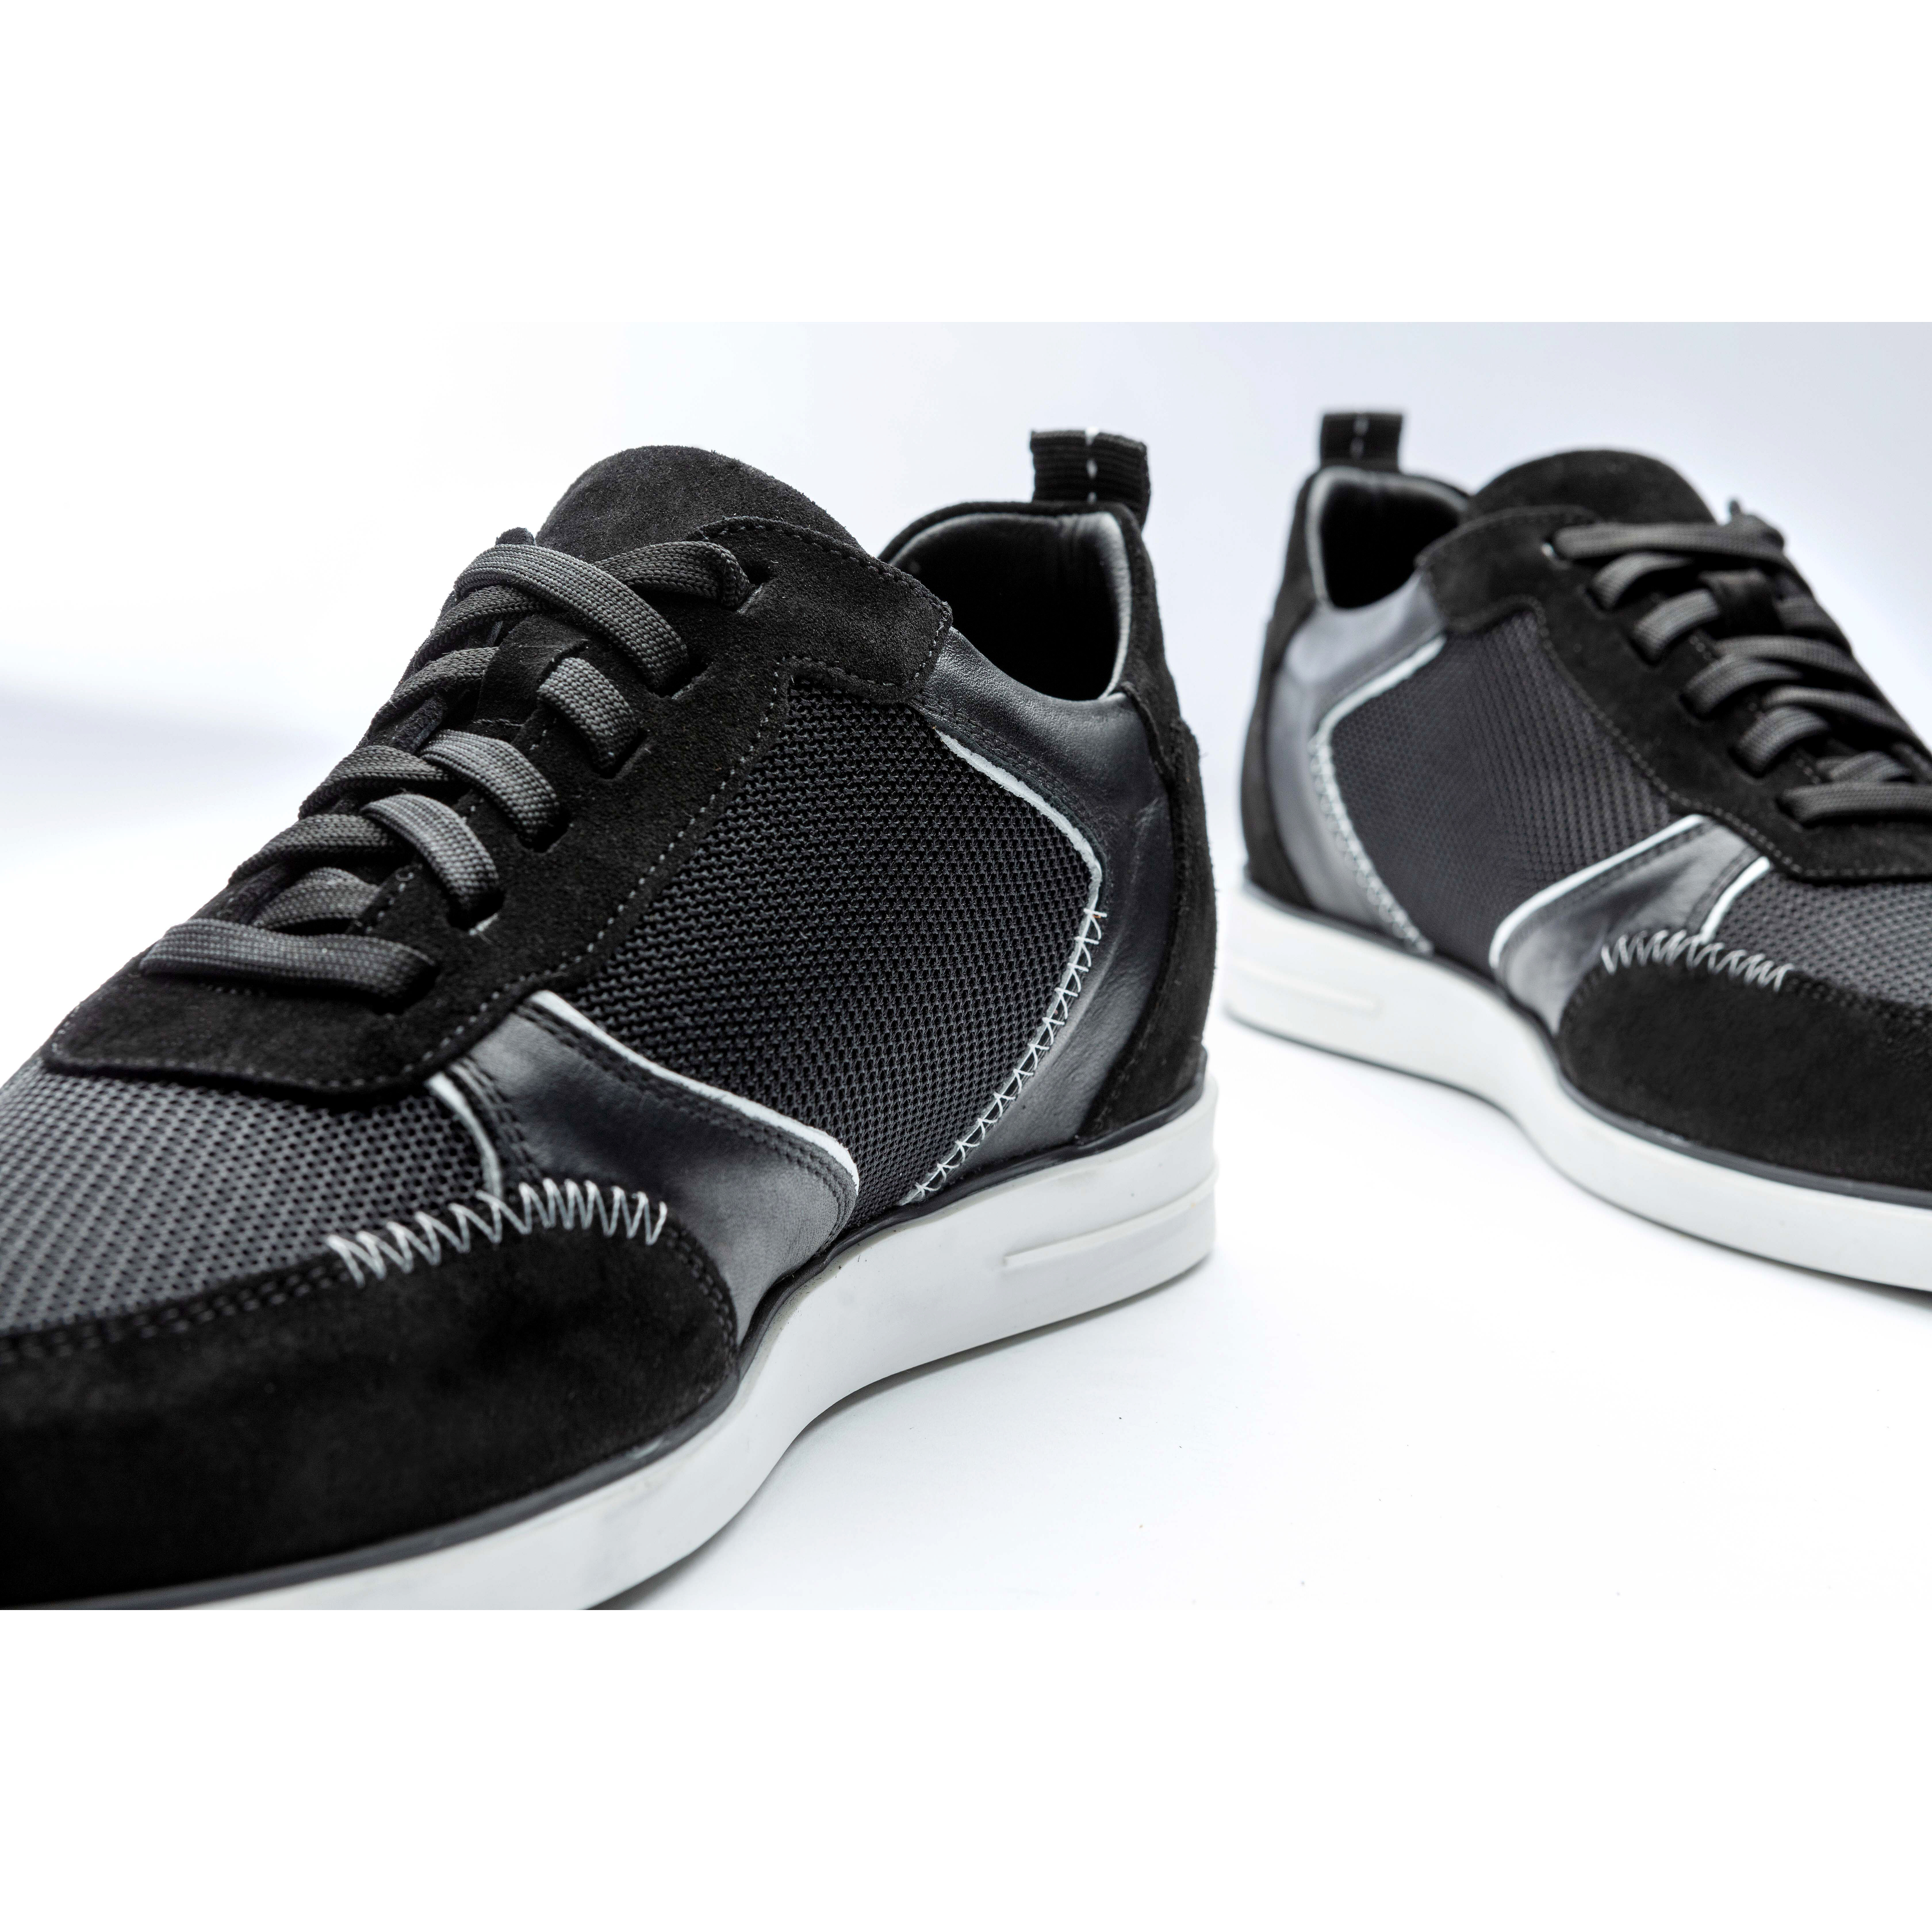 Triple20 Dartsshoes - Textil Leder Schwarz/Weiß